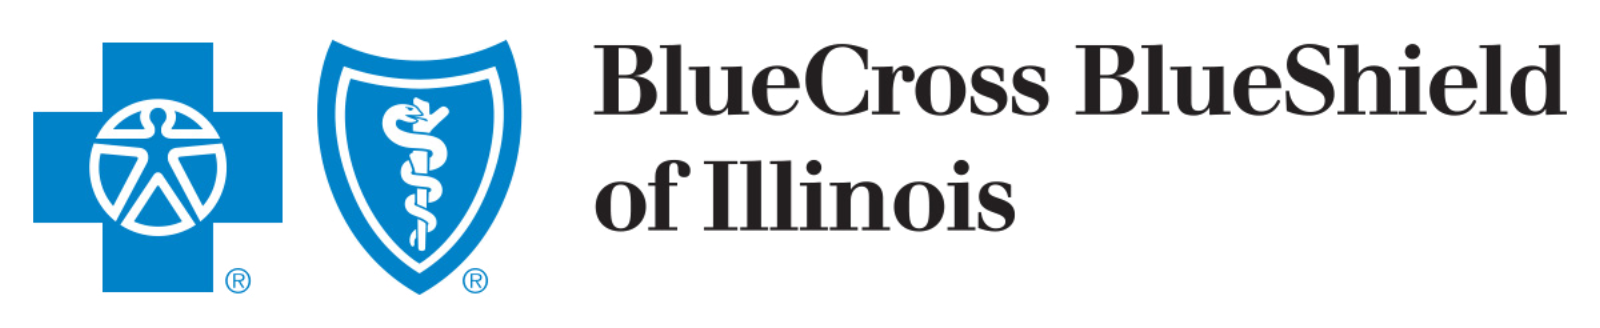 Blue Cross Blue Shield Illinois Logo